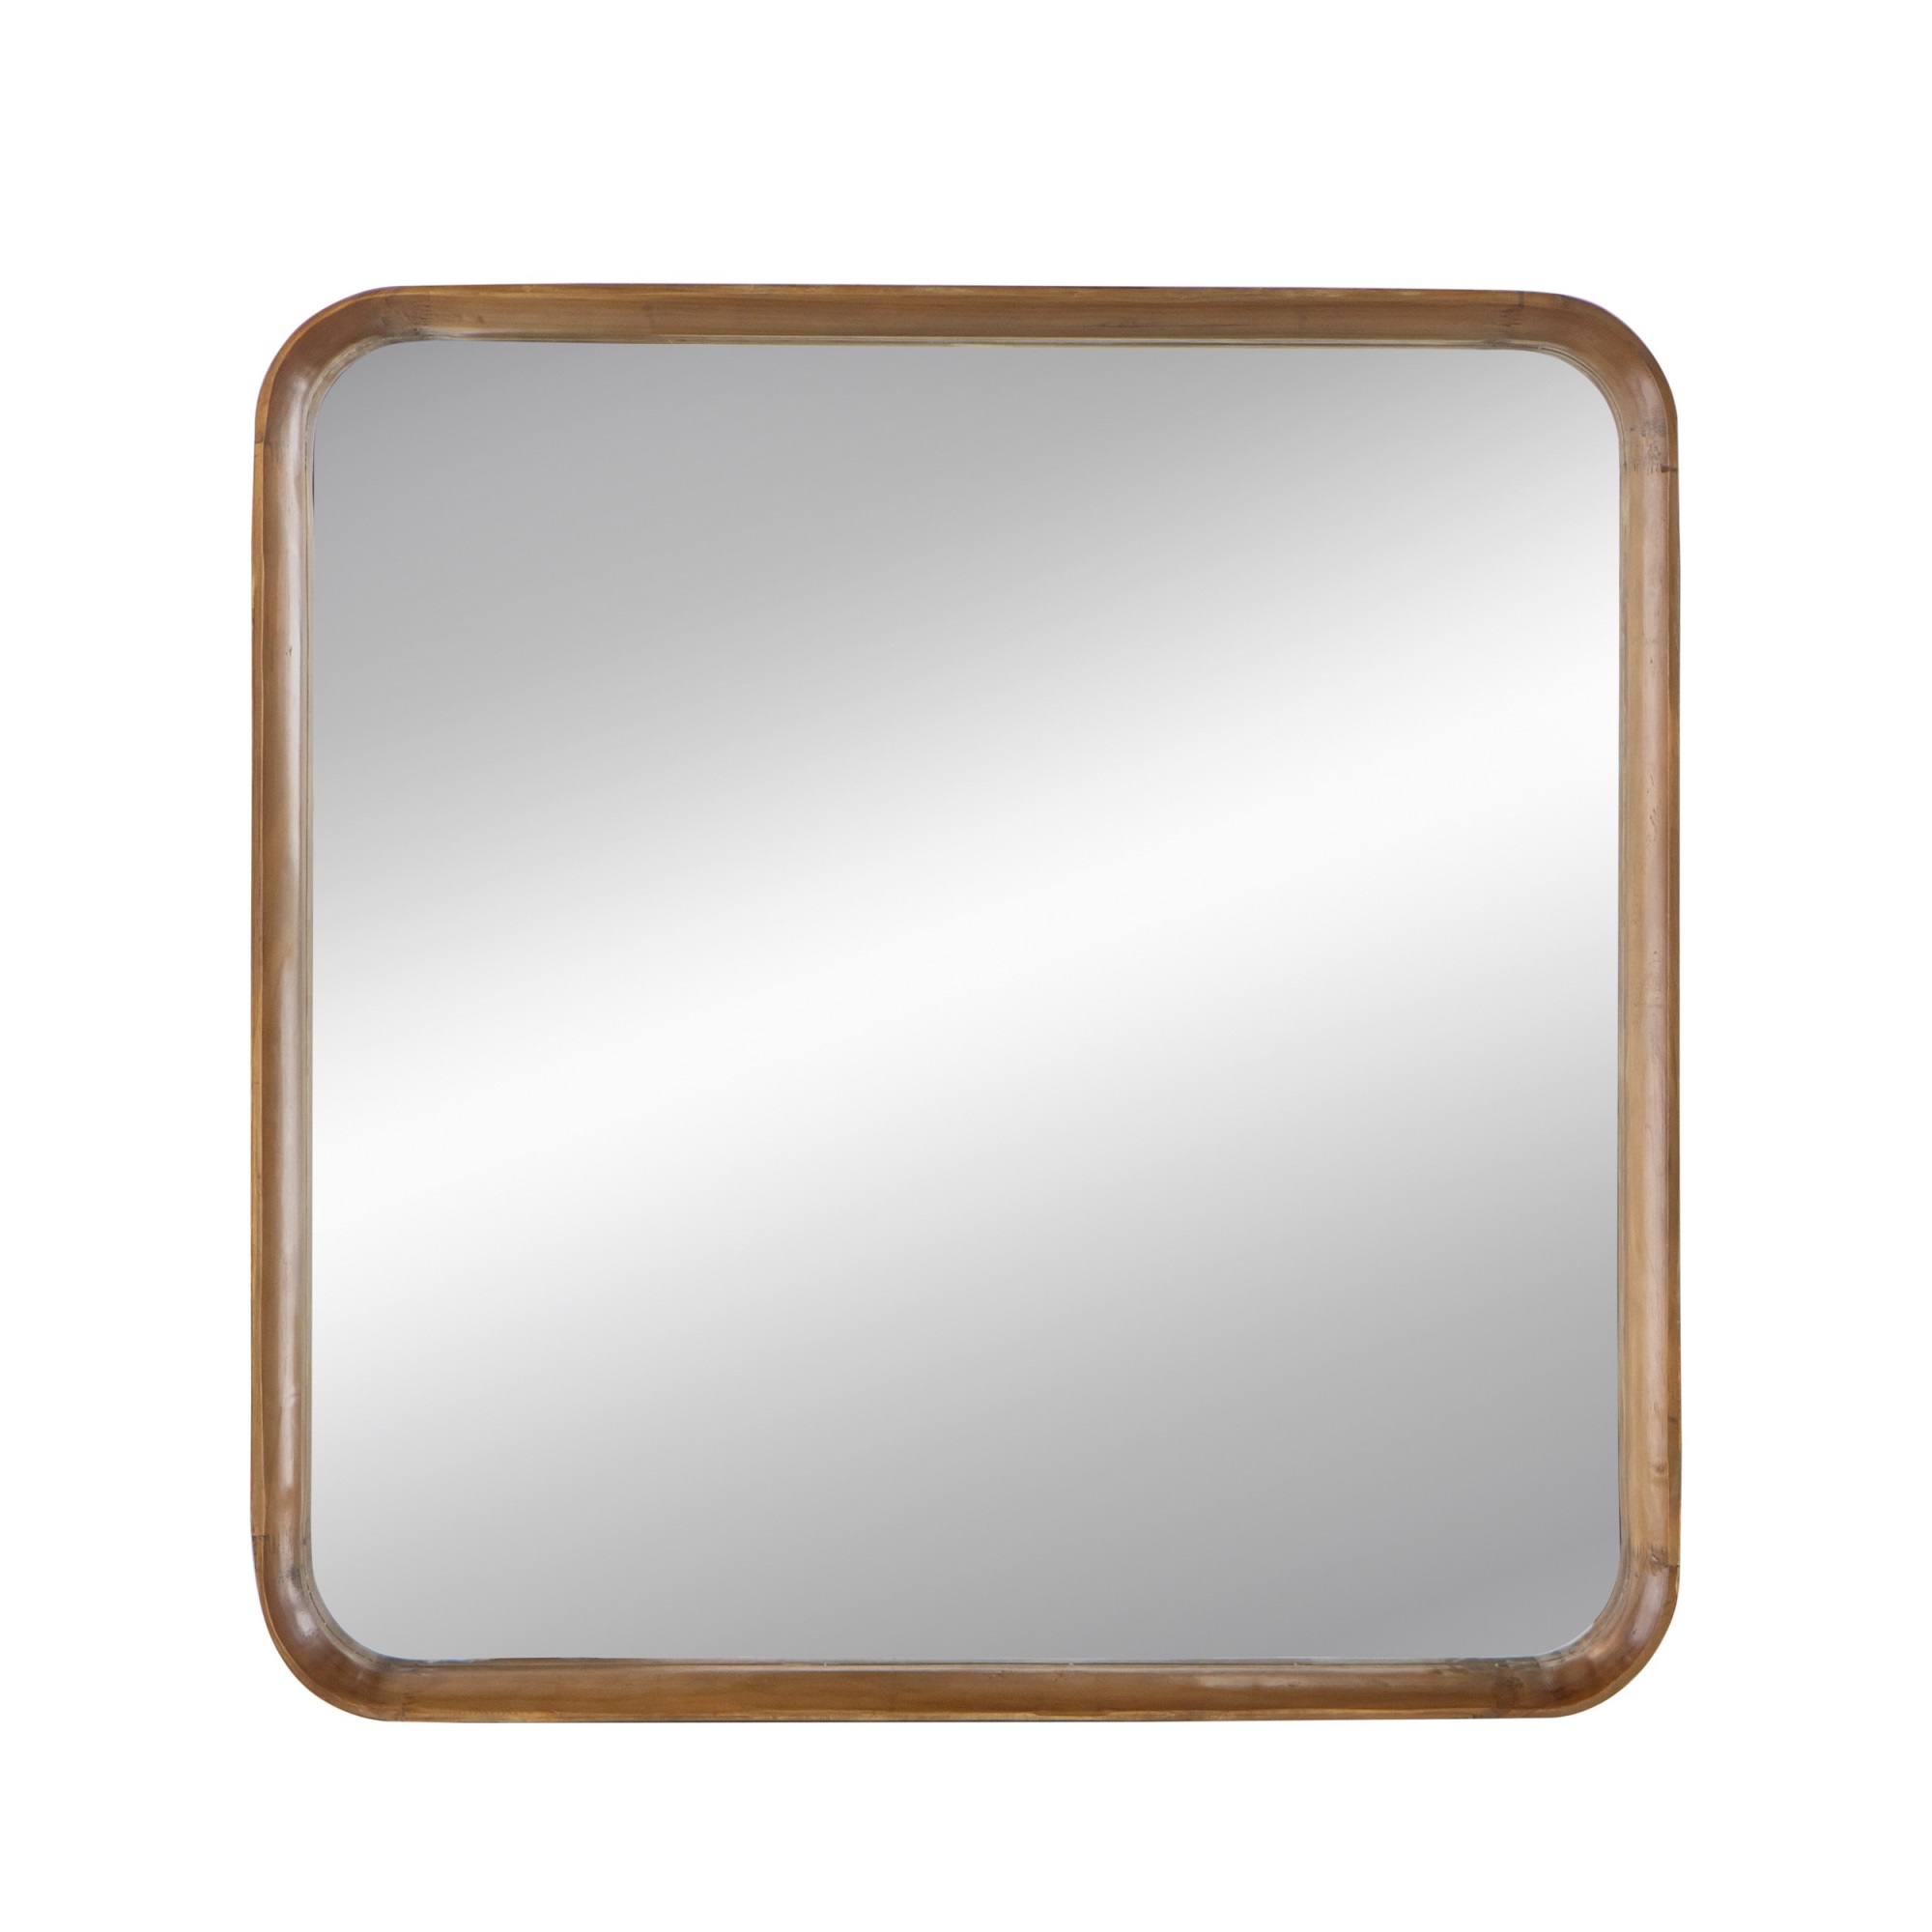 BenJara Roe 32 Inch Wall Mirror, Brown Curved Pine Wood Frame, Minimalistic